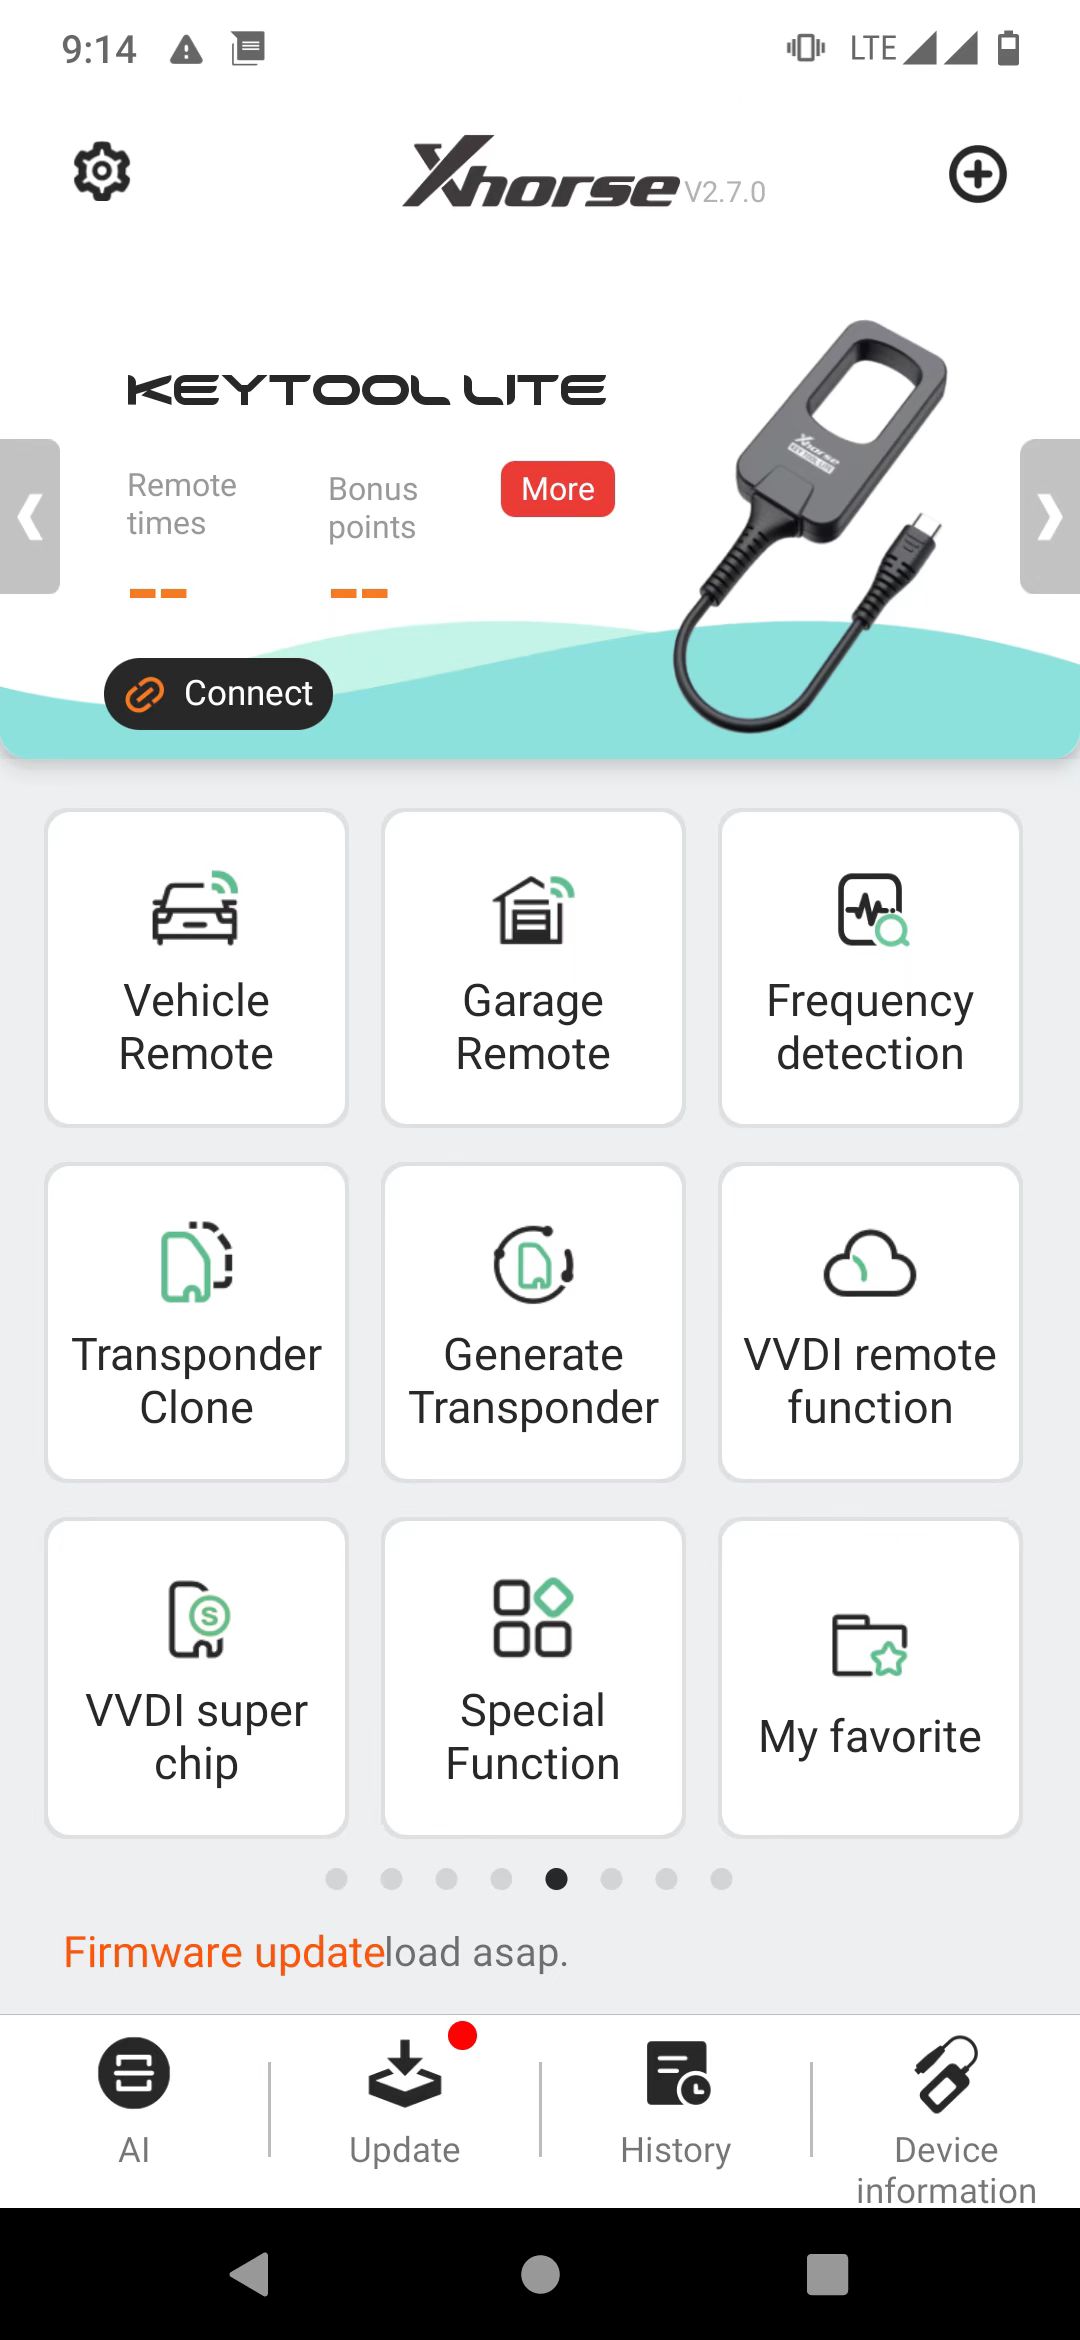 Xhorse VVDI BEE Key Tool Lite Work on Android Phone